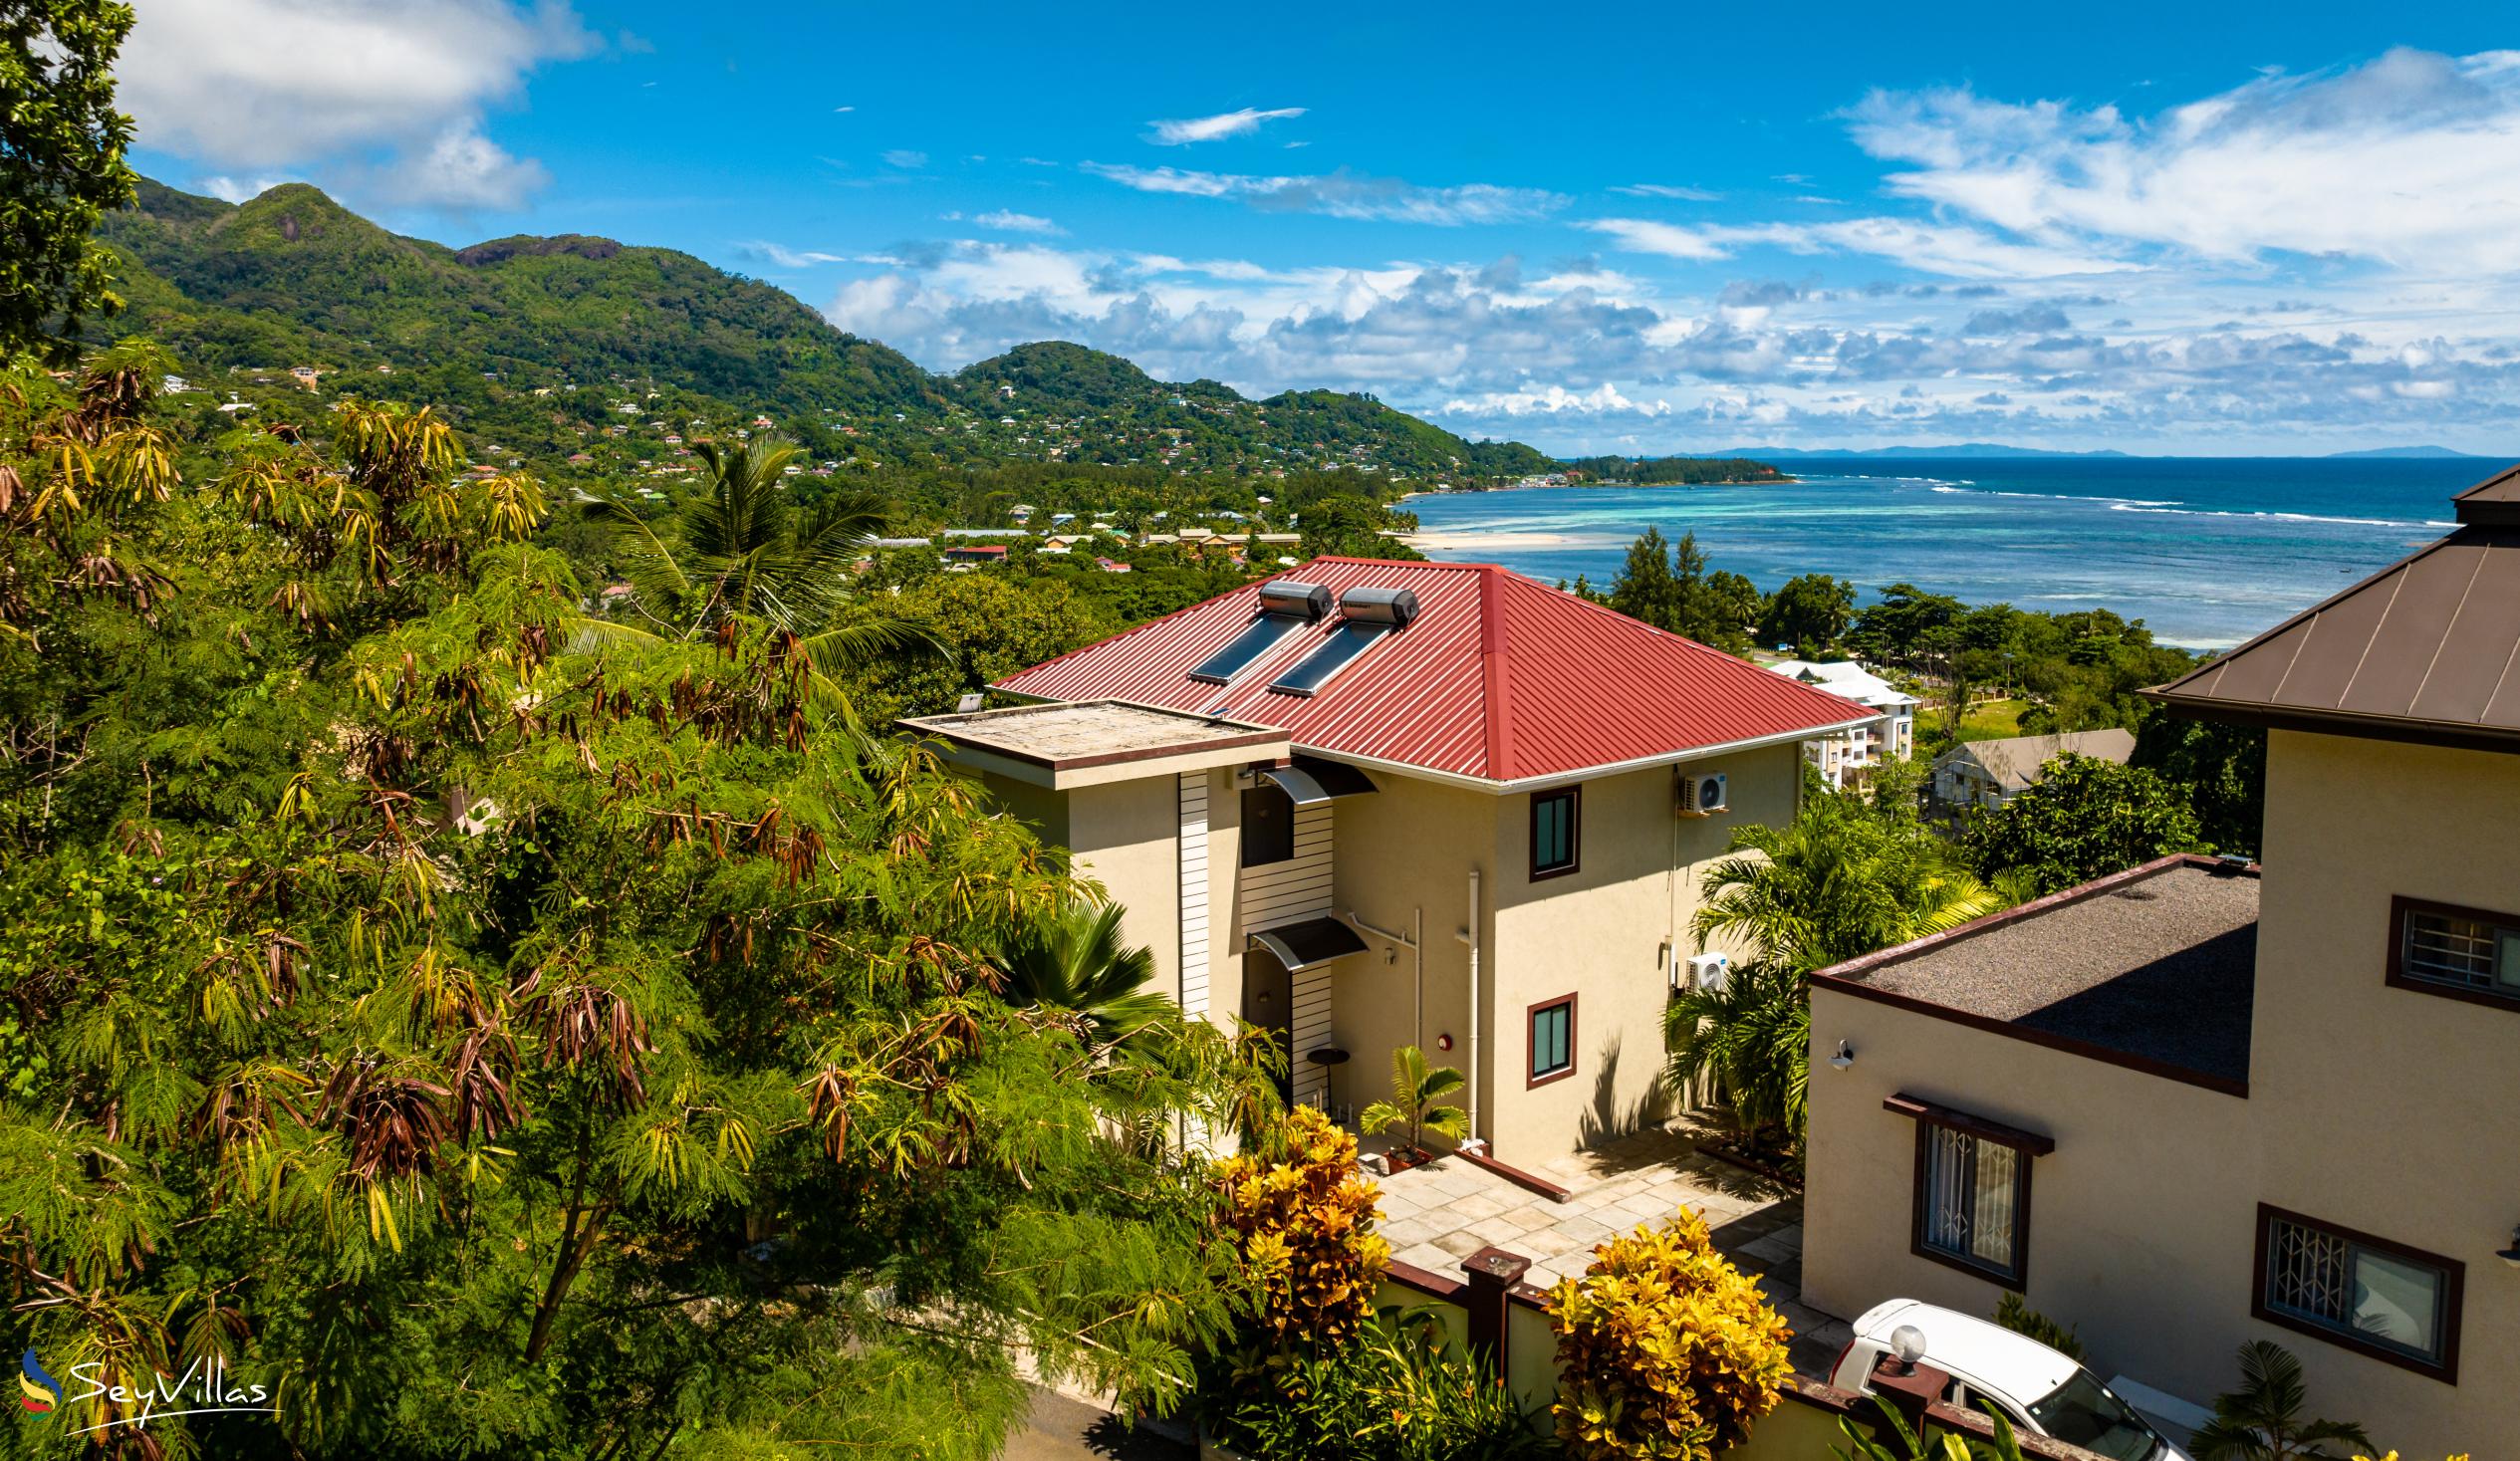 Photo 1: La Vida Selfcatering Apartments - Outdoor area - Mahé (Seychelles)